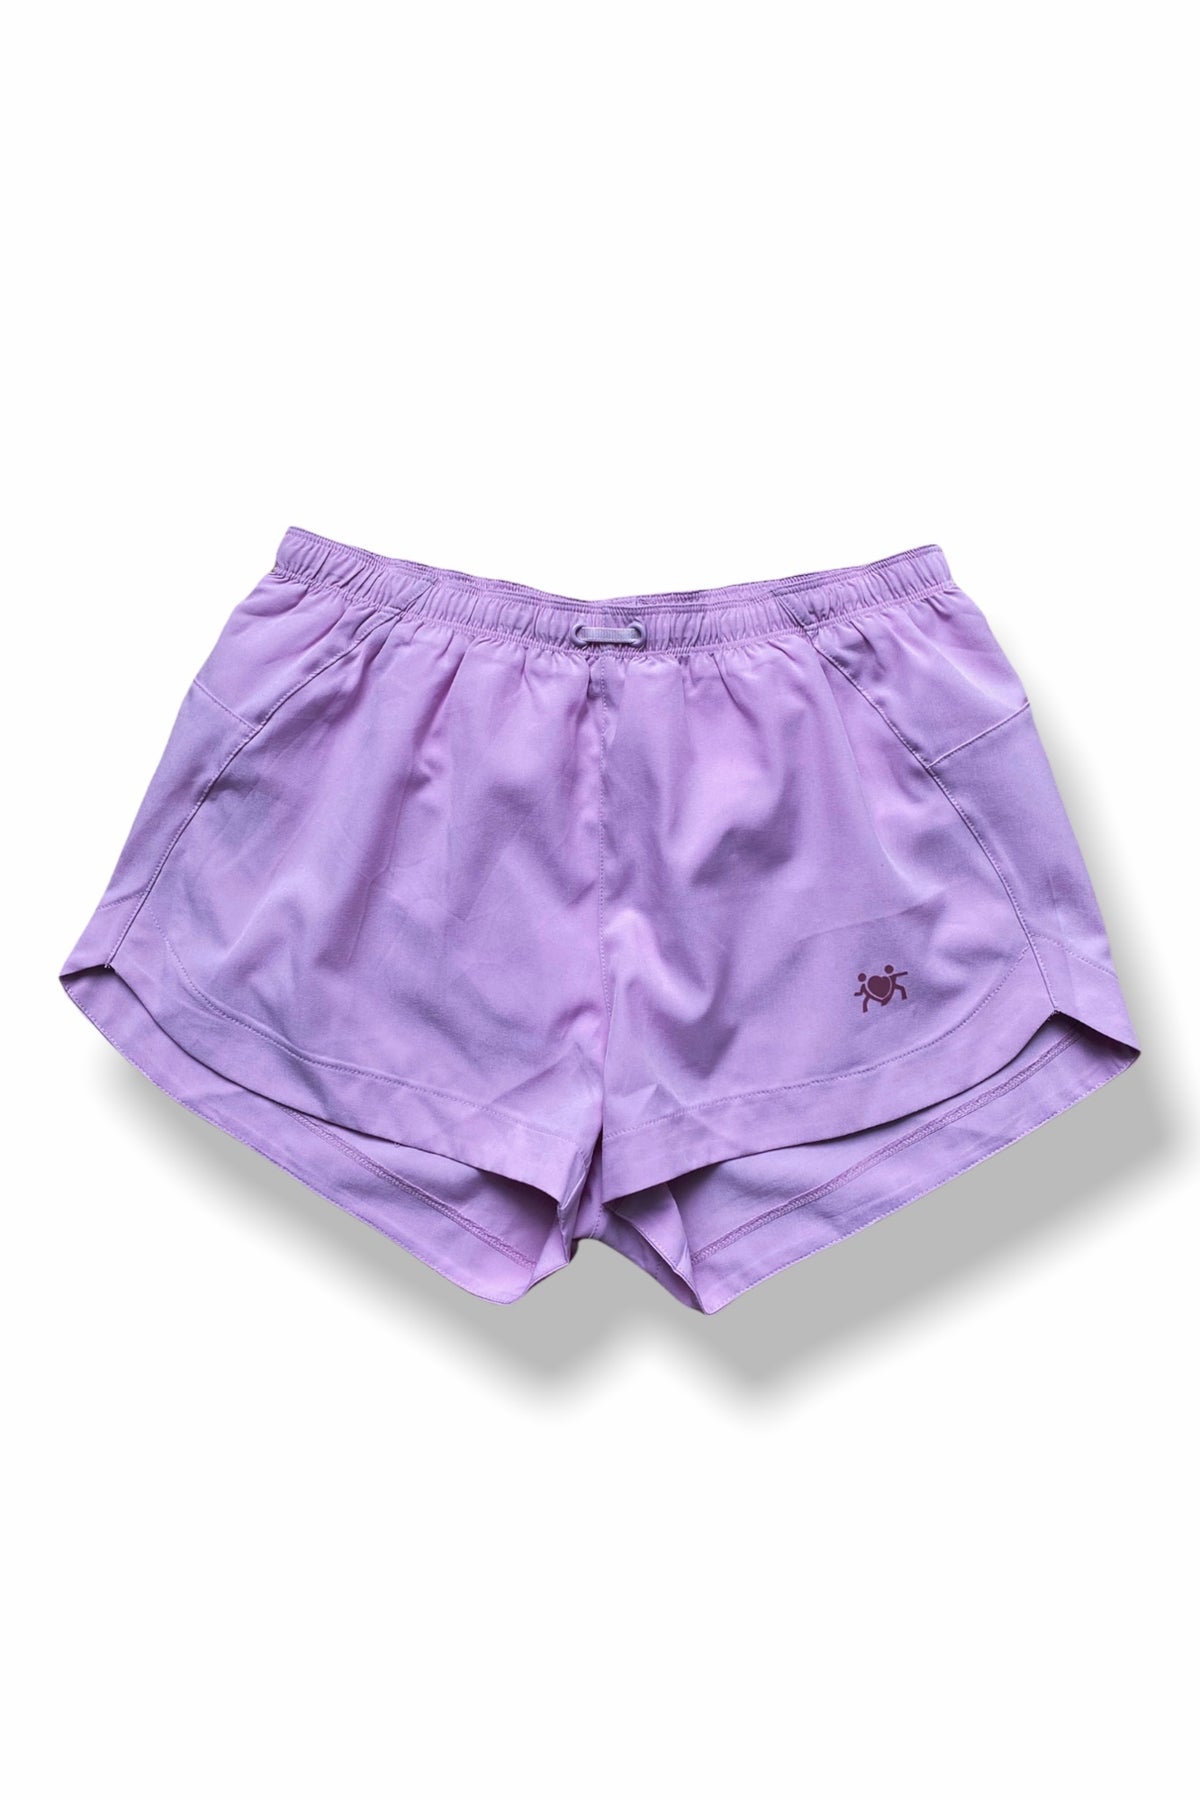 Schenley Run Shorts (matcha)